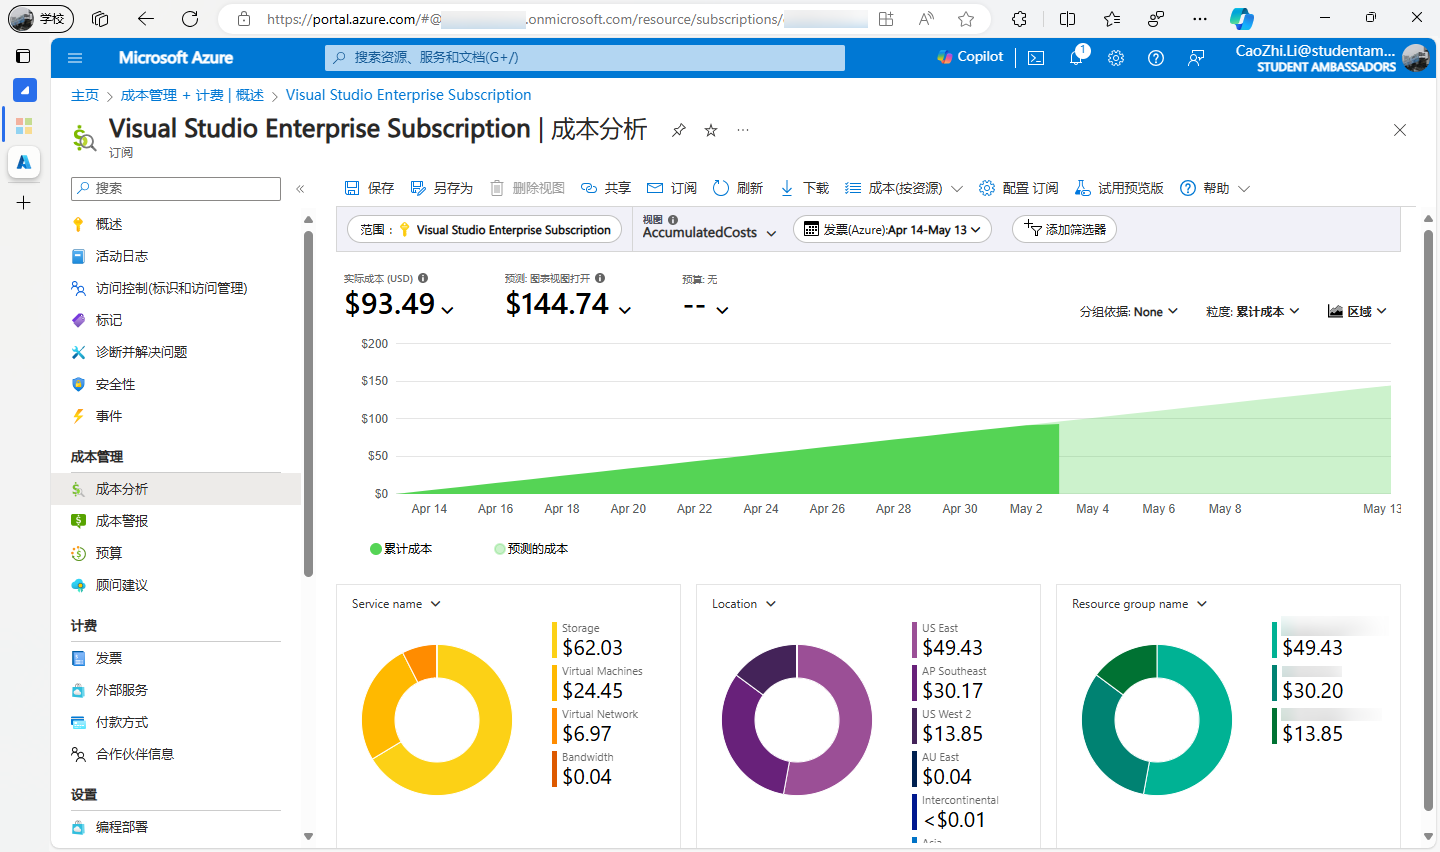 Microsoft Azure 成本管理 - 成本分析 屏幕截图